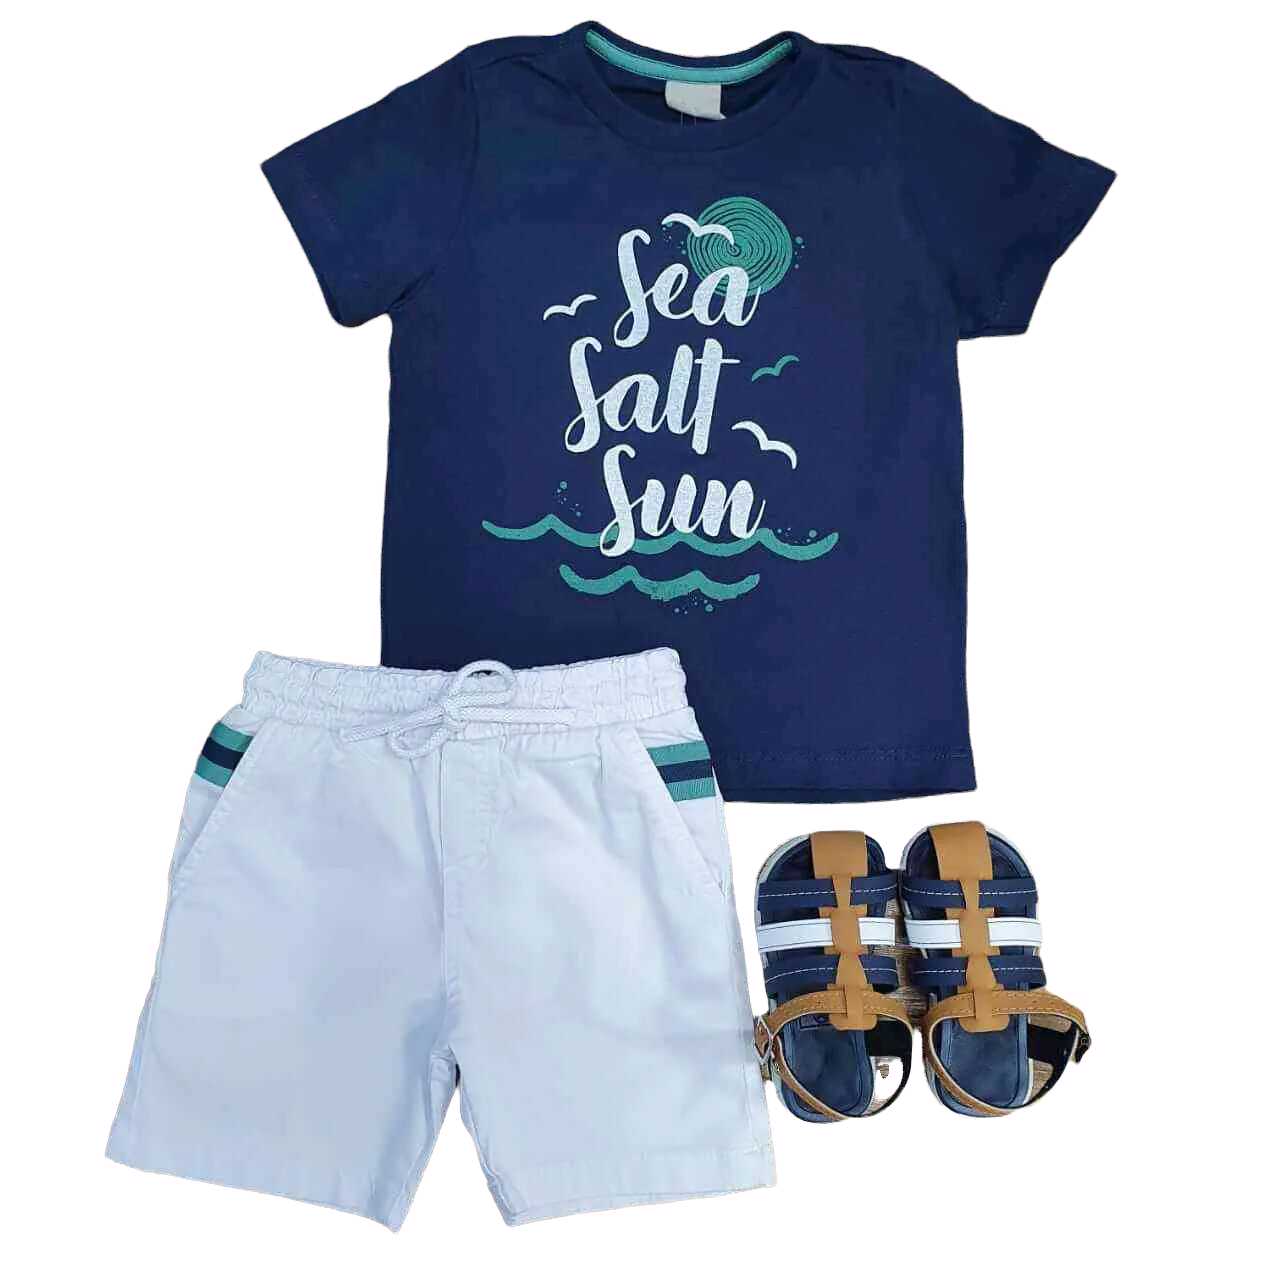 Bermuda Branca com Camiseta Sea Salt Sun Infantil - Lojinha da Vivi